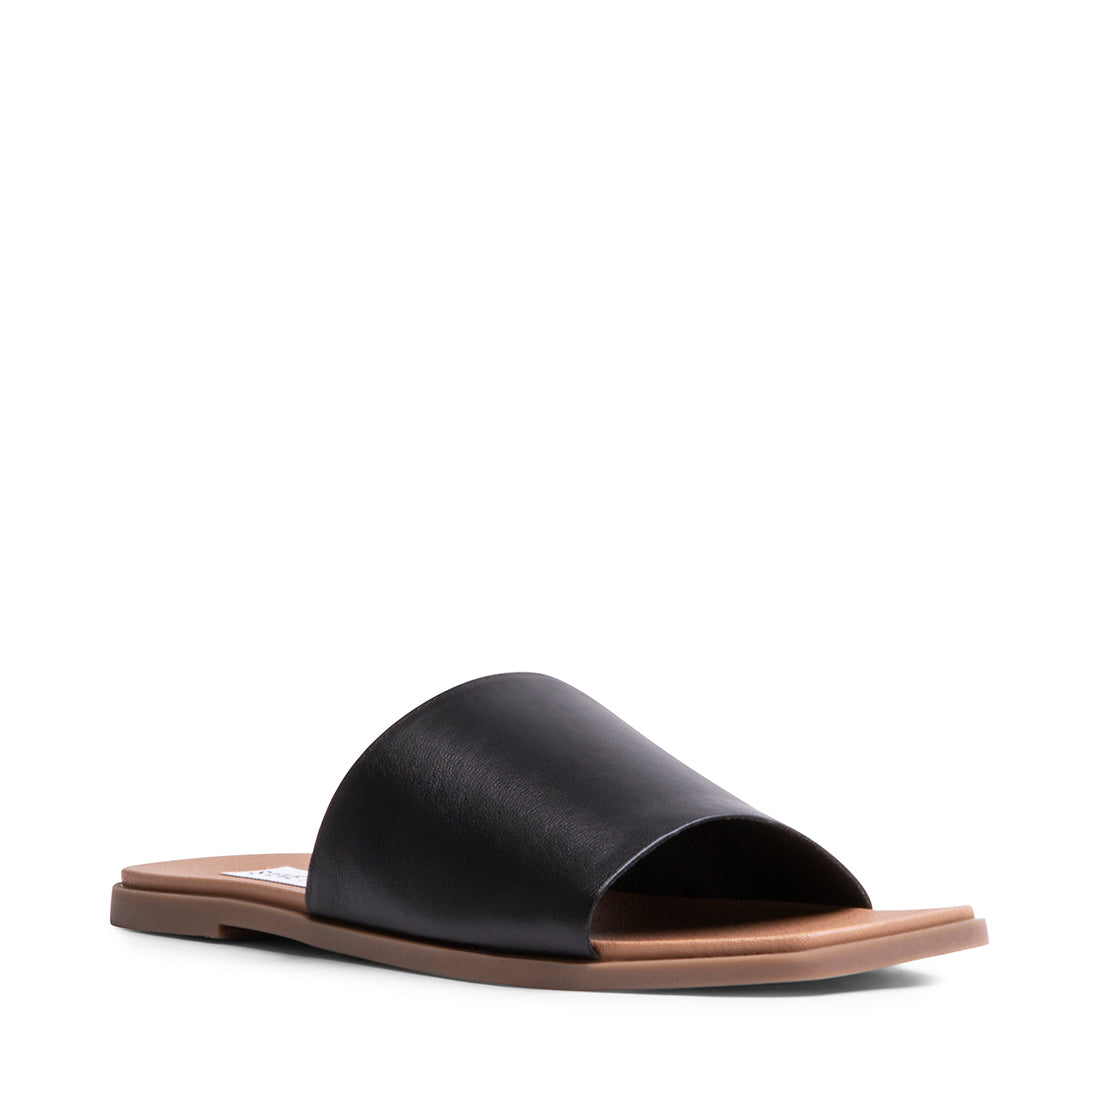 KARRMAA Black Leather Women's Slide Sandals | Women's Designer Sandals ...